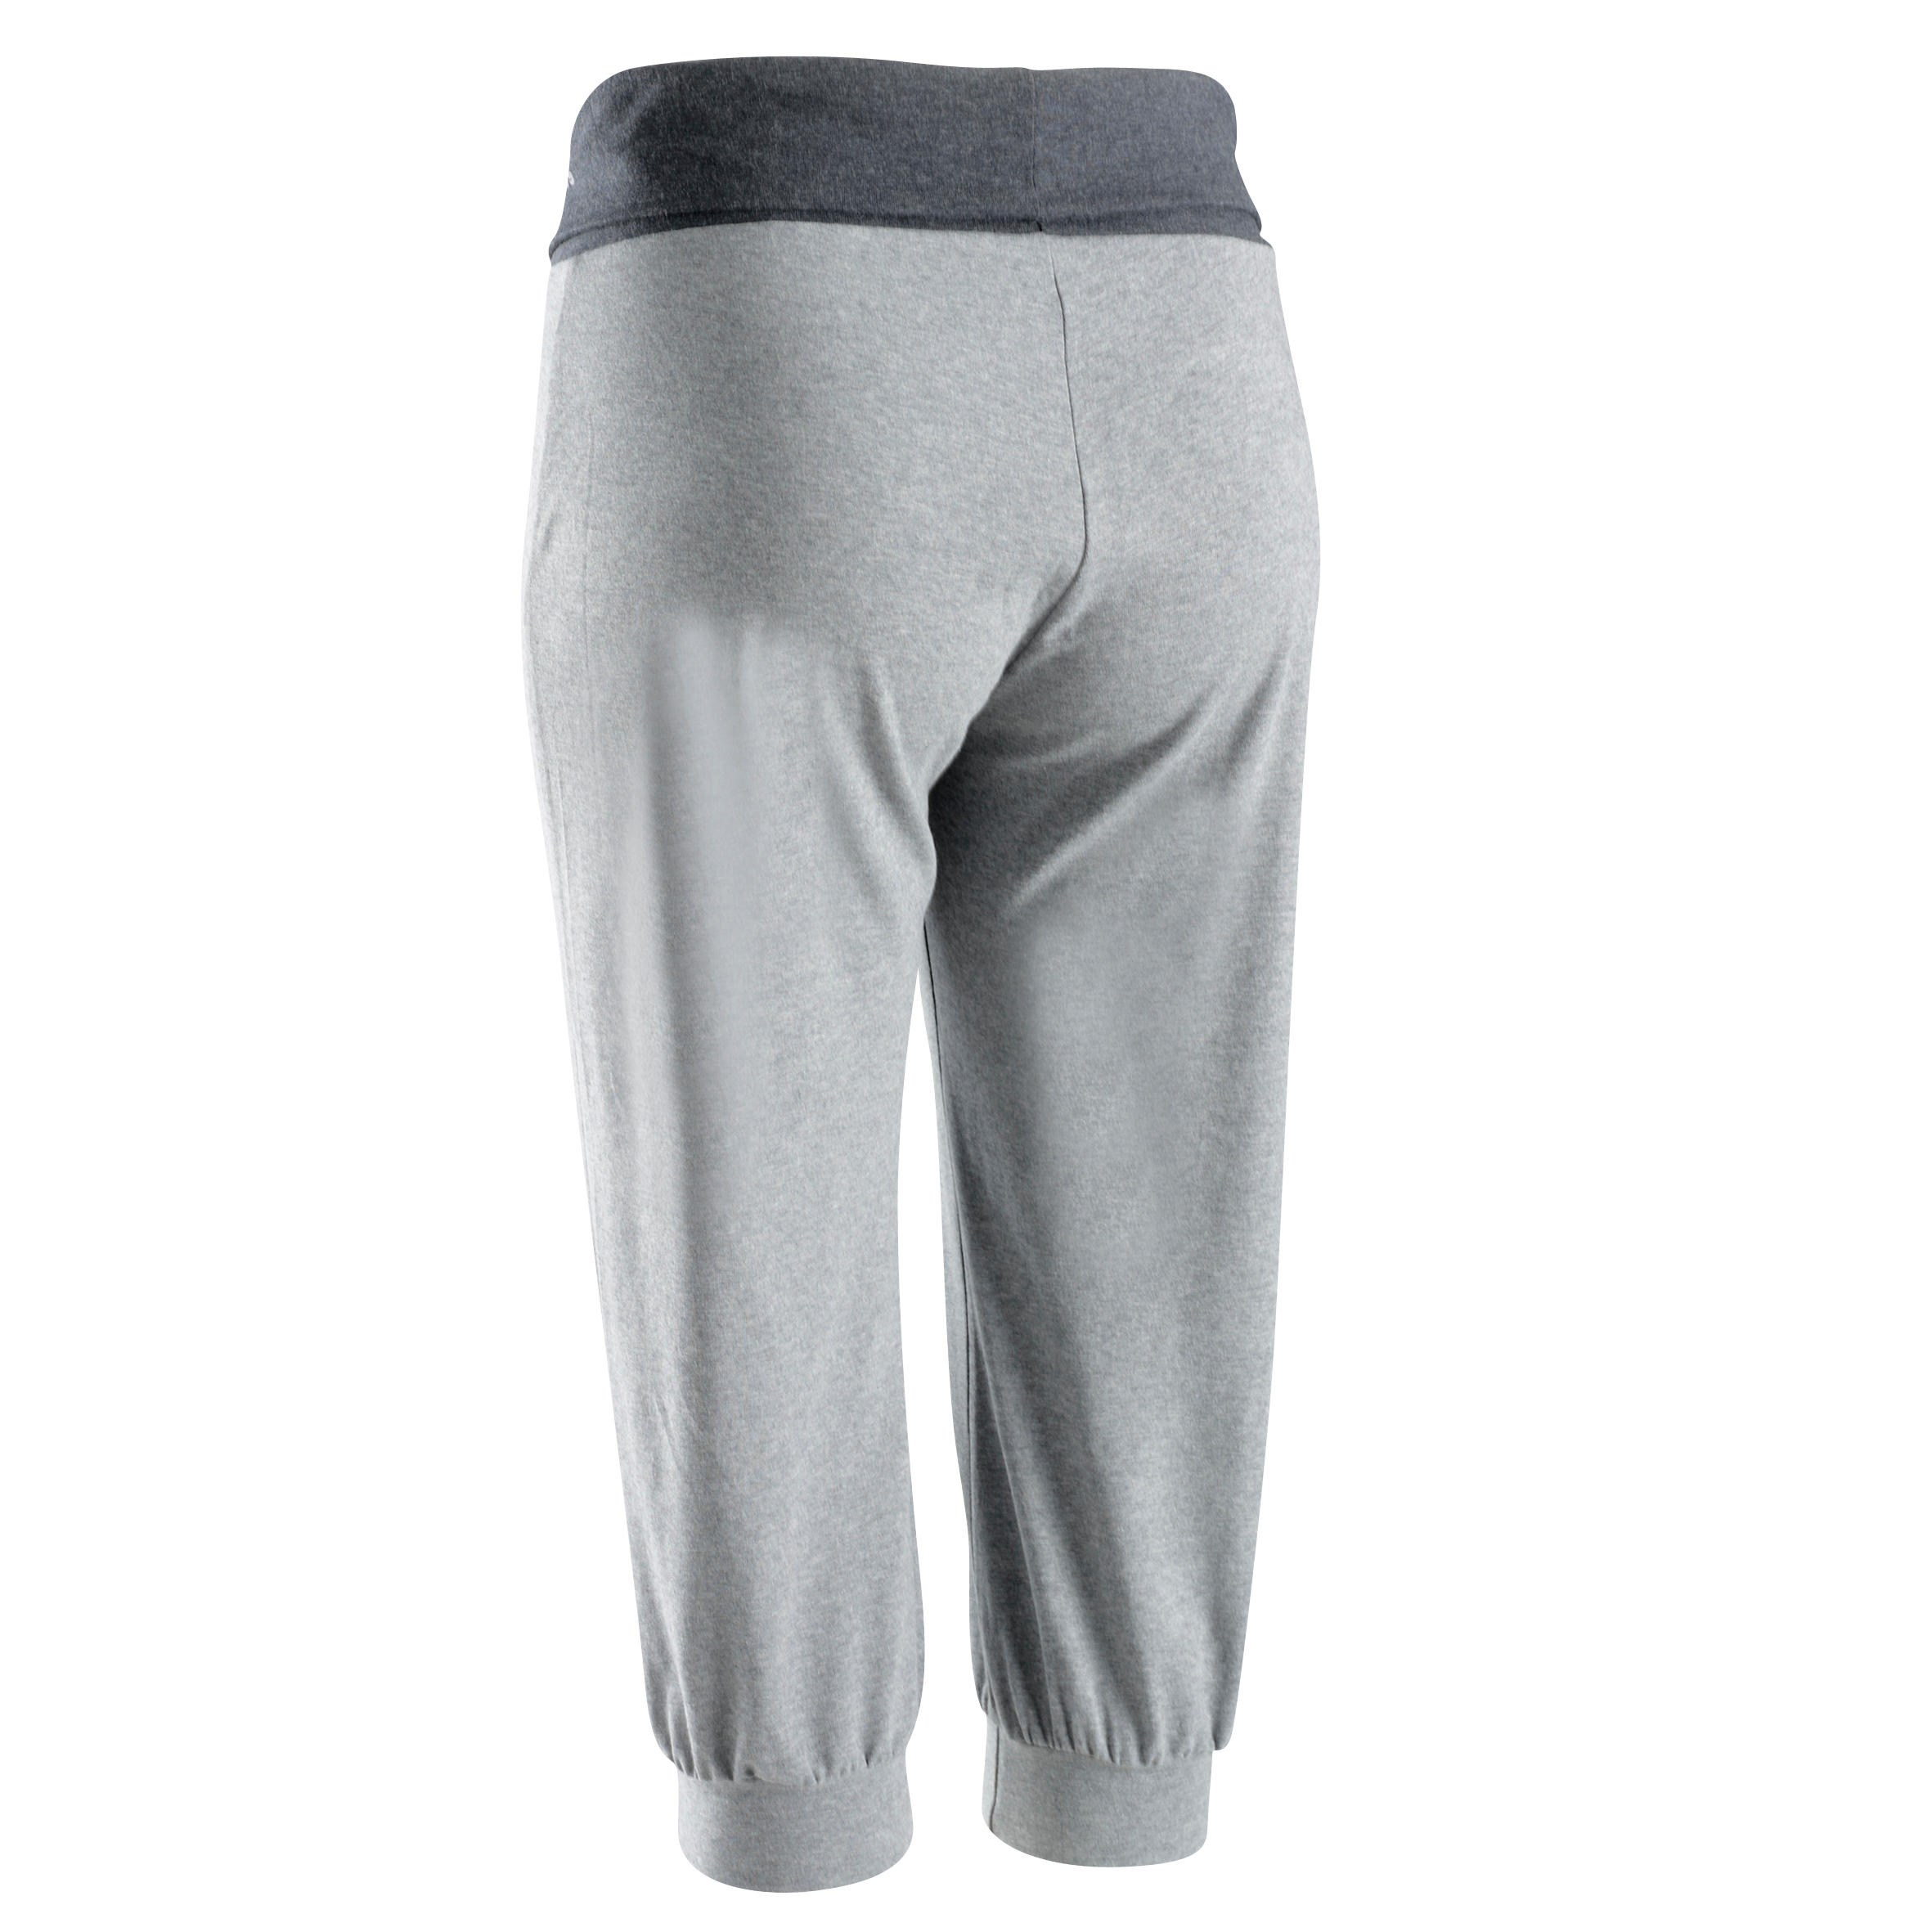 Women's gentle gymnastics, yoga organic cotton cropped trousers - light grey 2/7